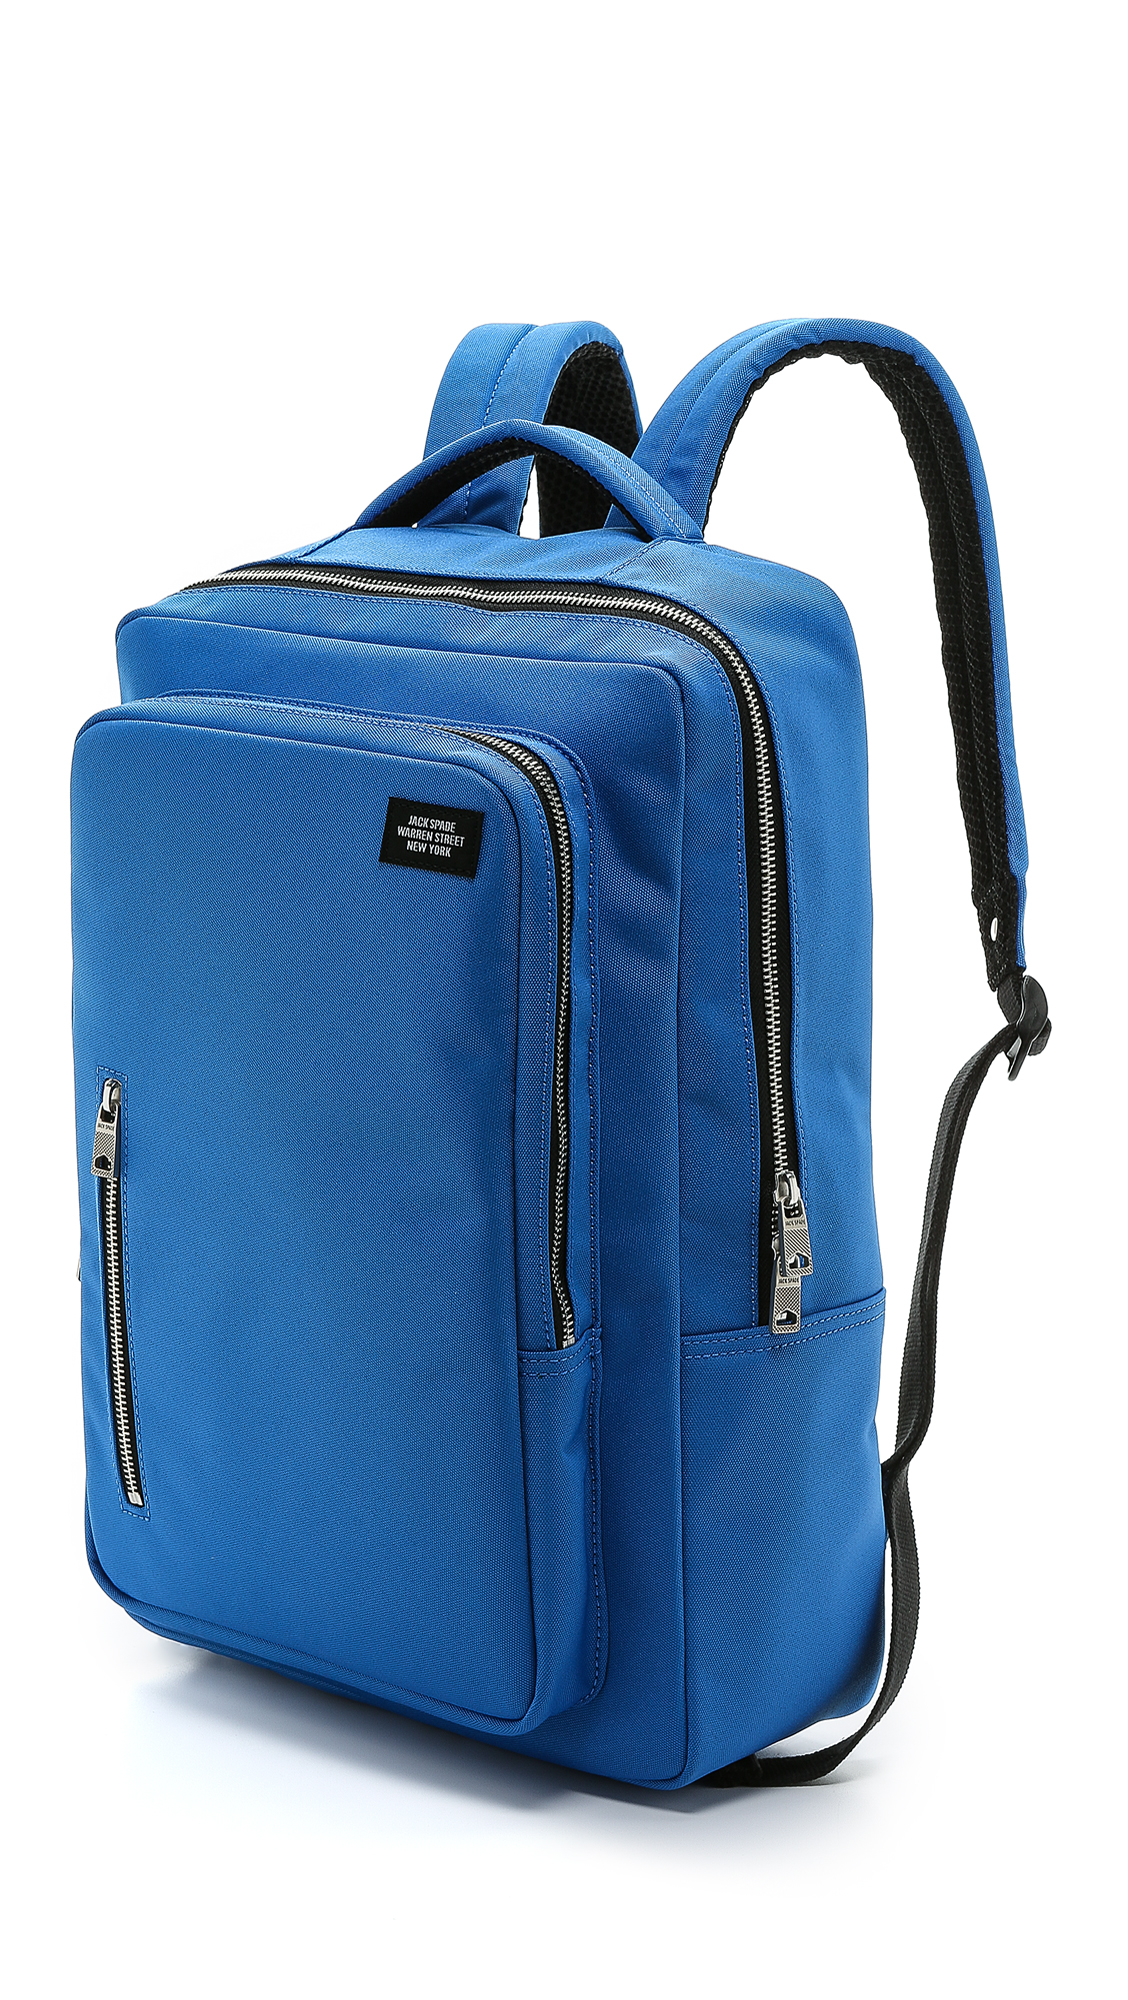 Lyst - Jack Spade Commuter Nylon Cargo Backpack in Blue for Men